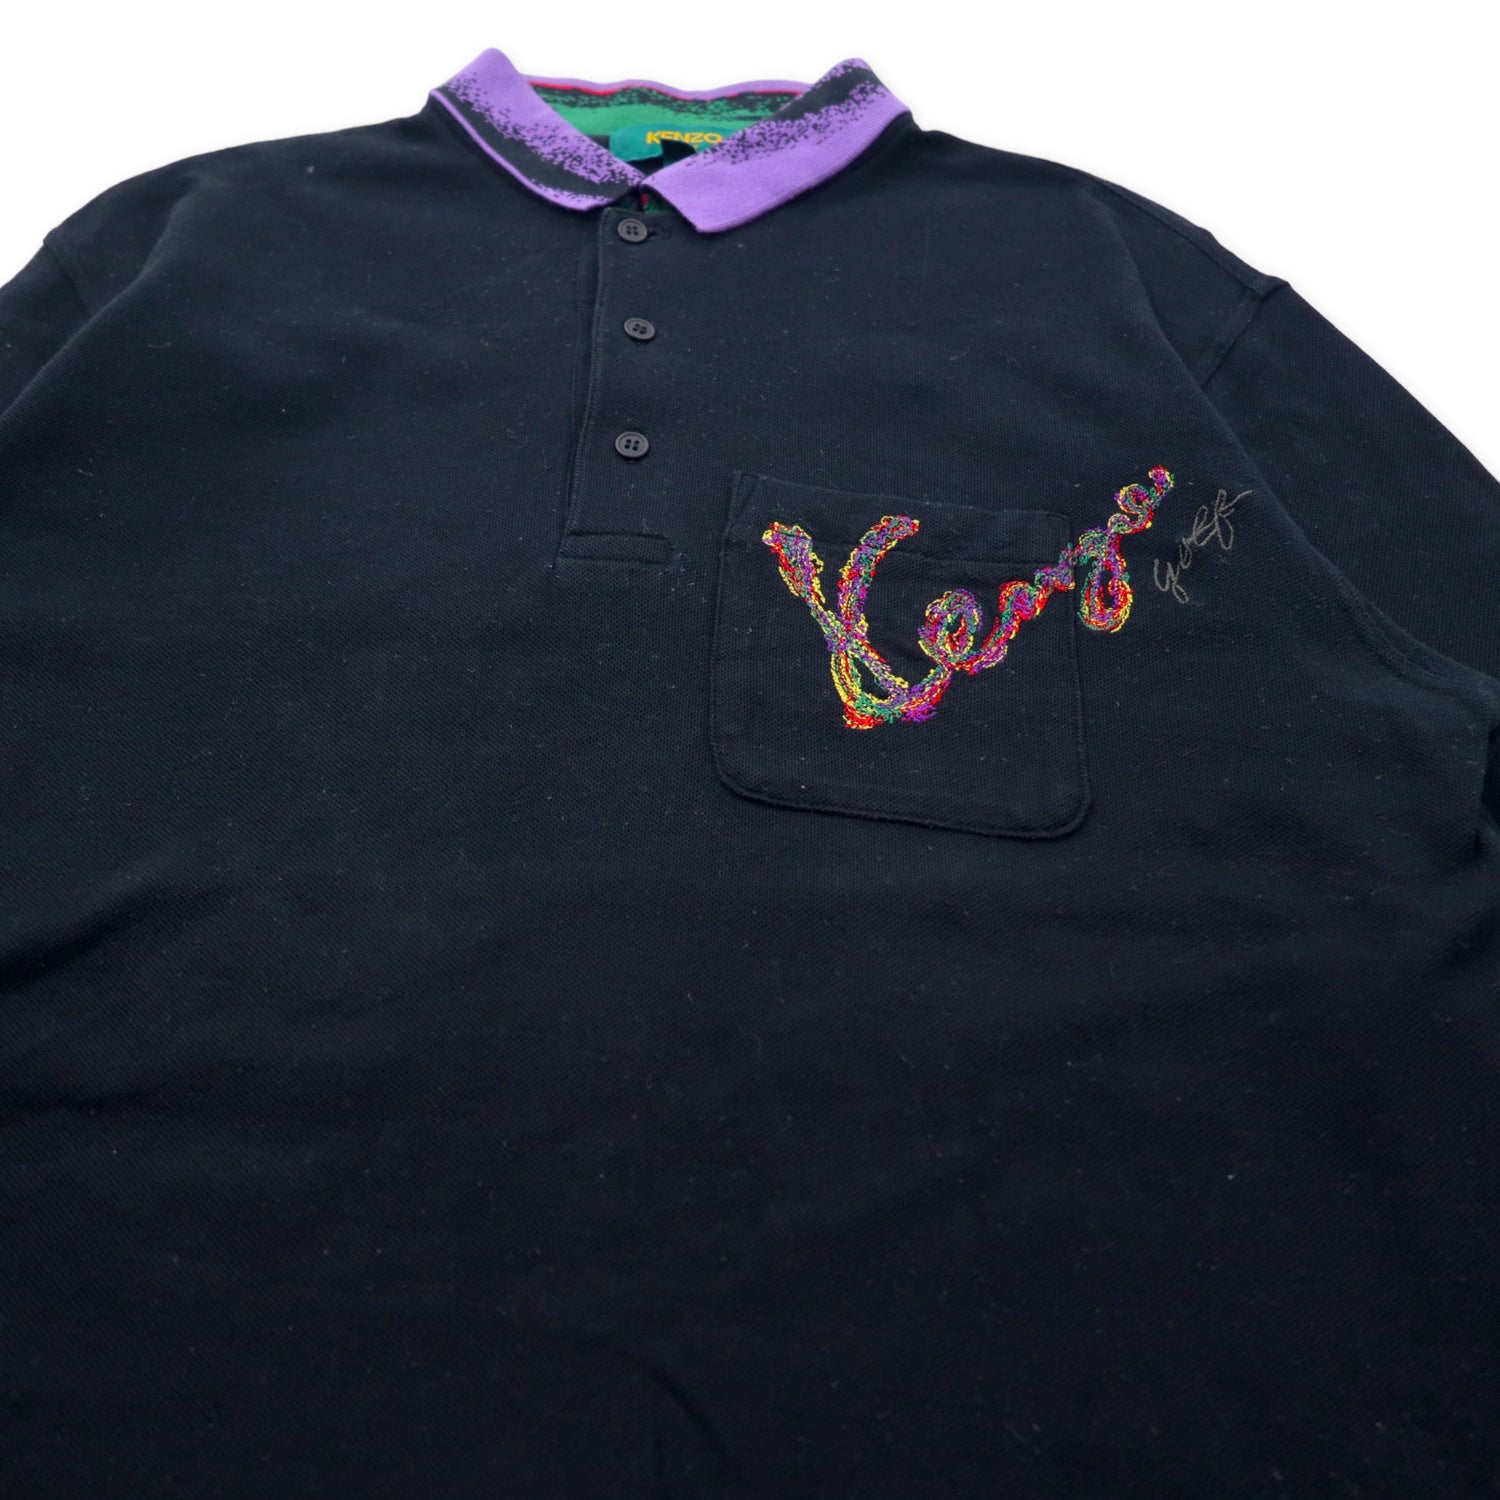 KENZO GOLF Long Sleeve Polo Shirt 3 Black Cotton Embroidery Japan